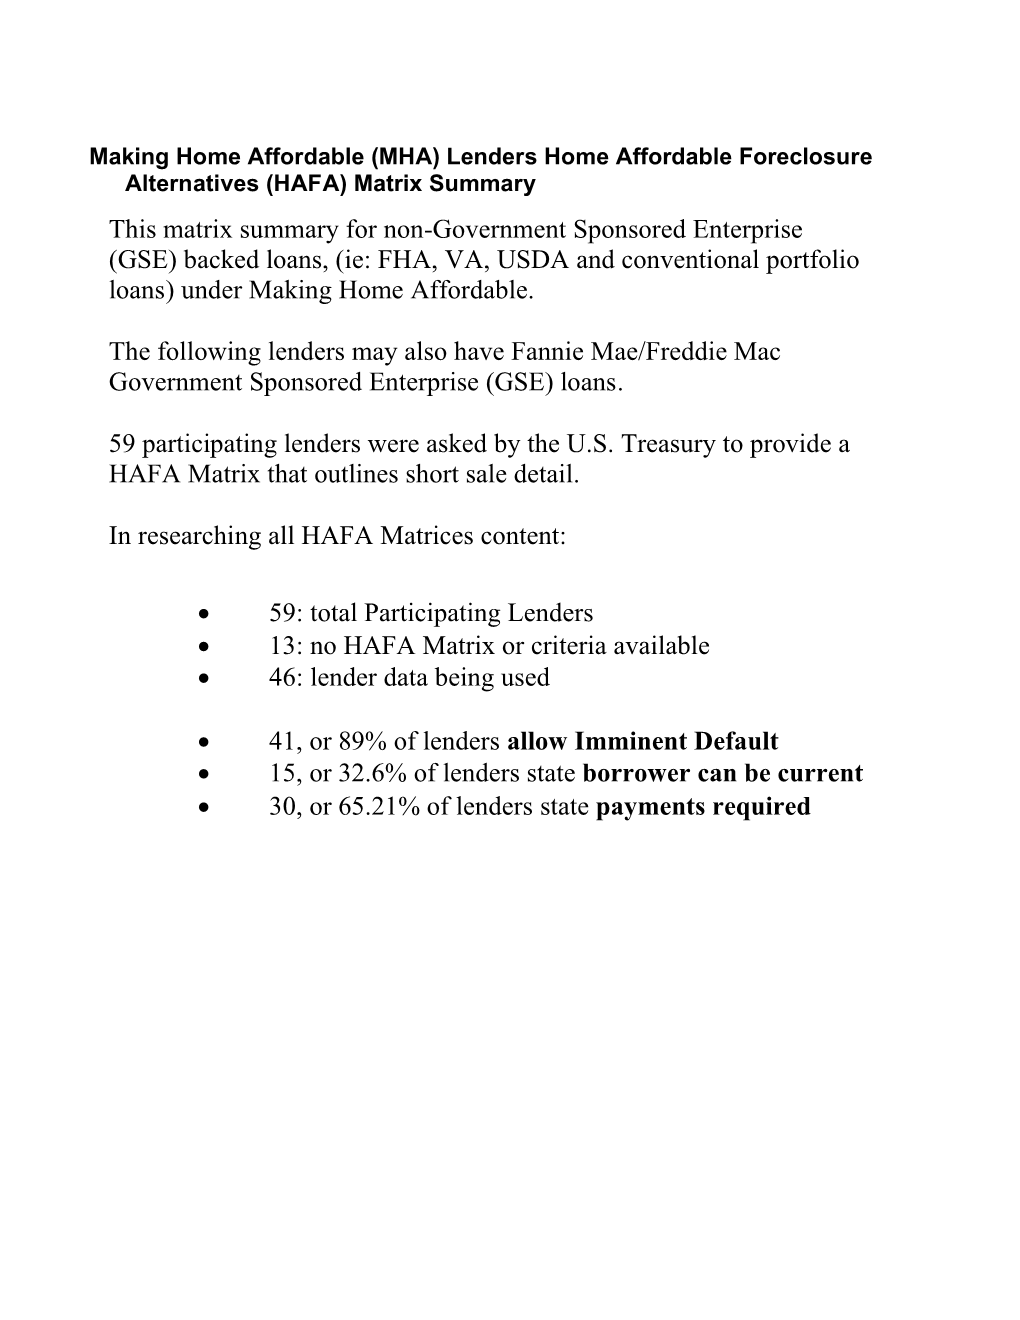 Making Home Affordable (MHA) Lenders Home Affordable Foreclosure Alternatives (HAFA) Matrix